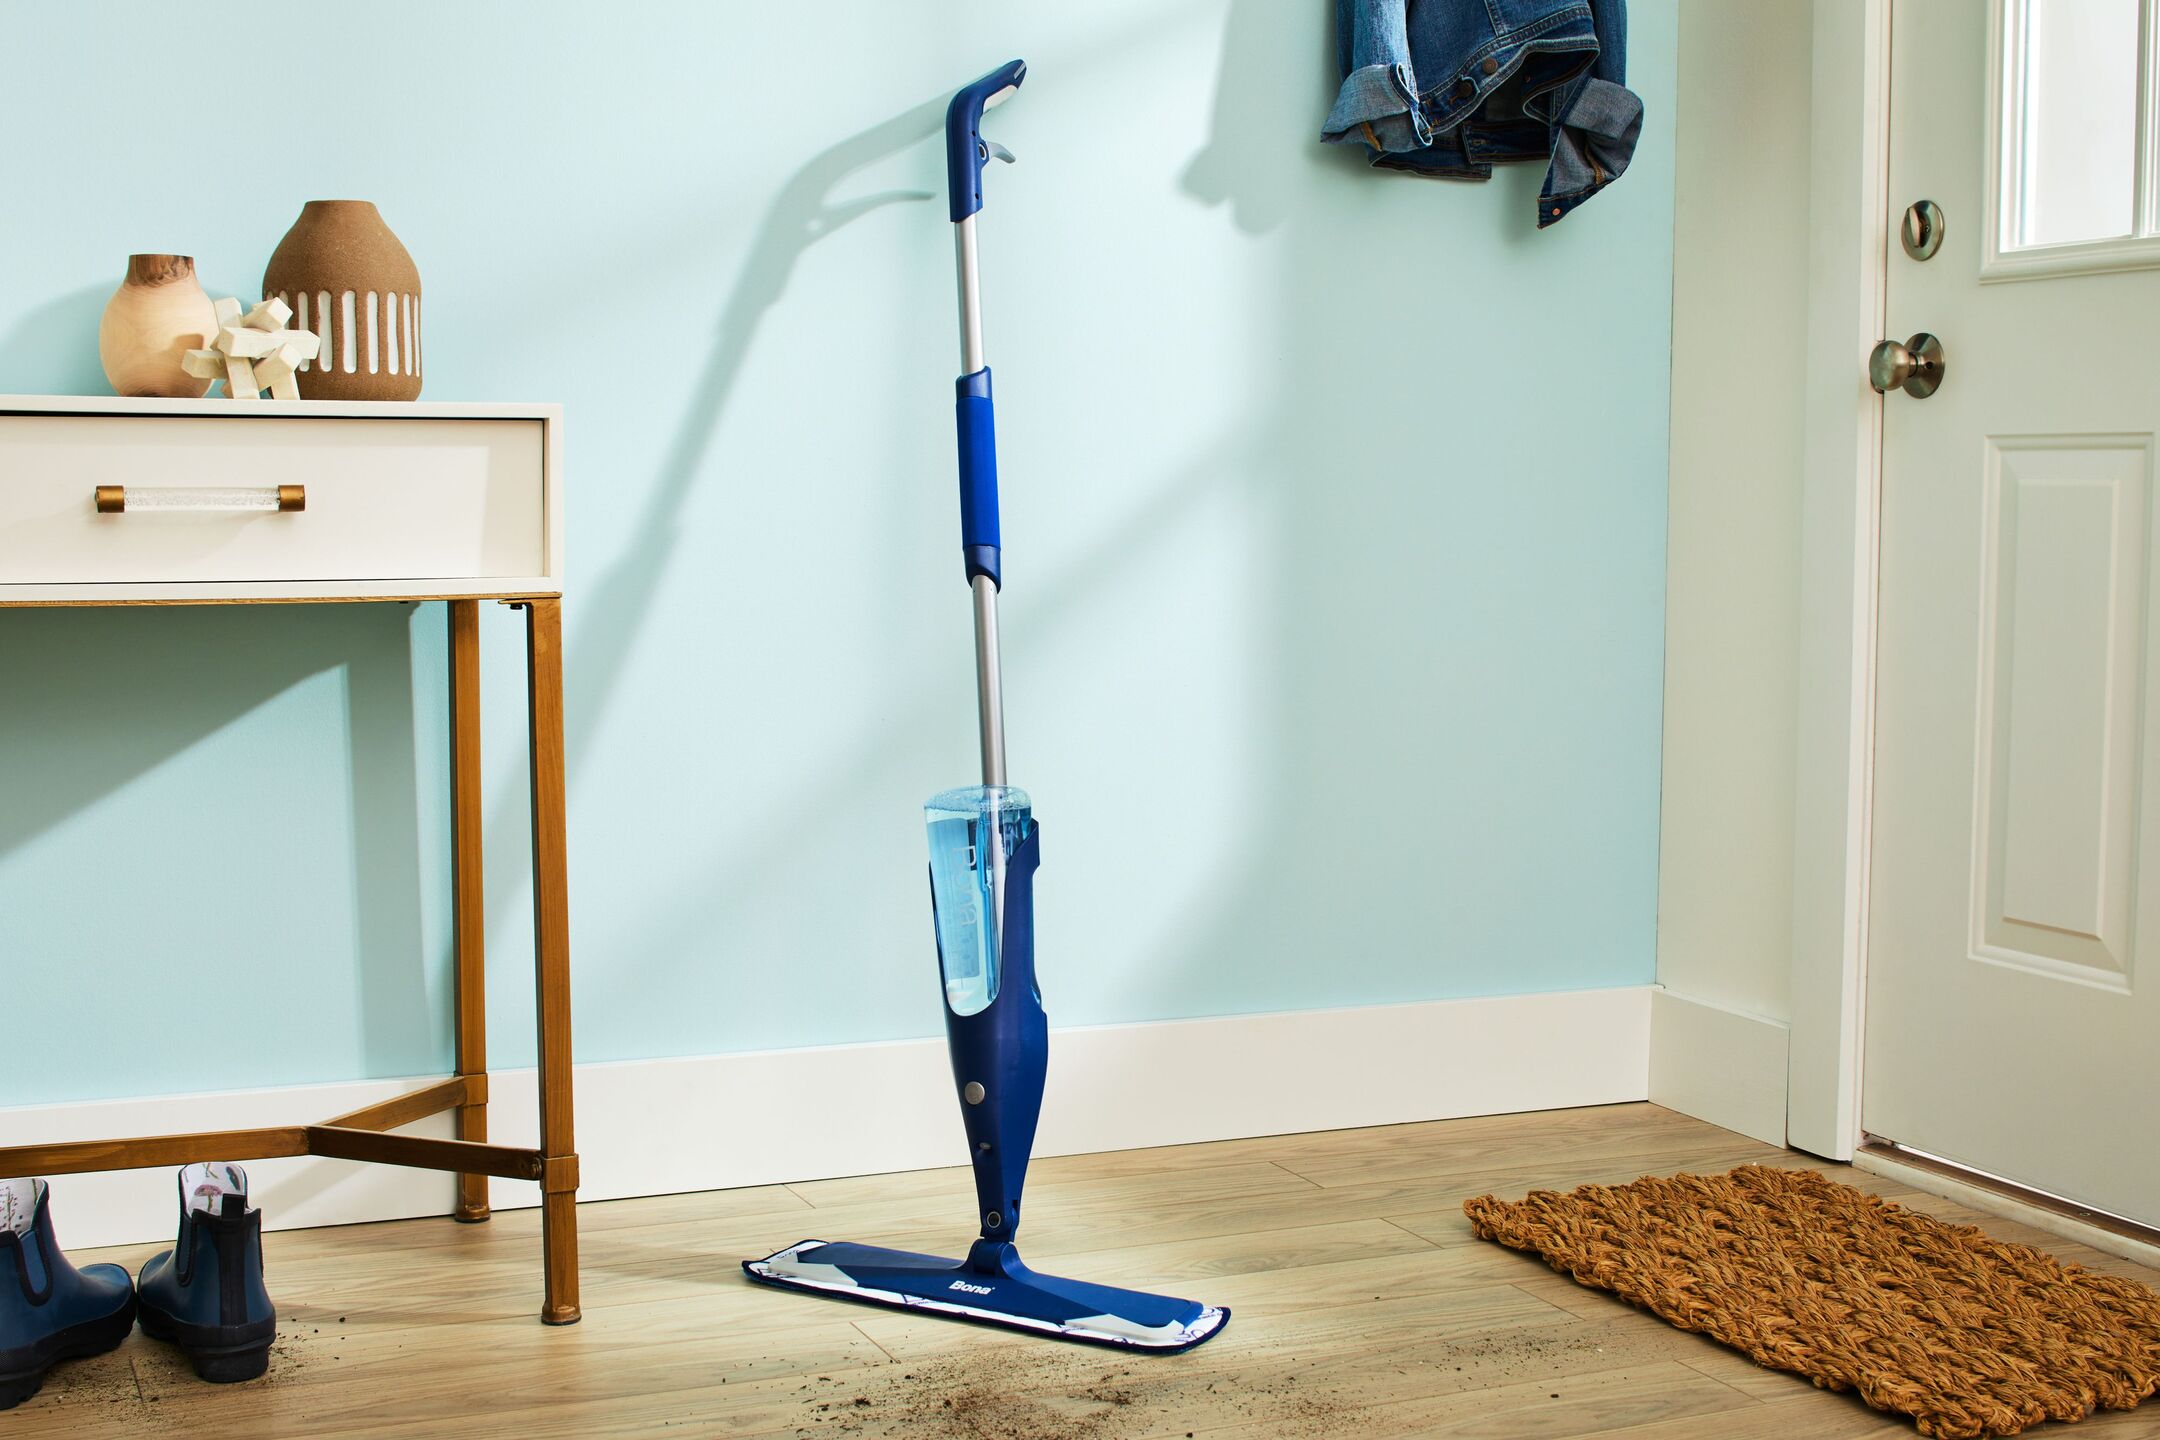 Bona Premium Spray Mop for Hardwood Floors (WM710013496) 